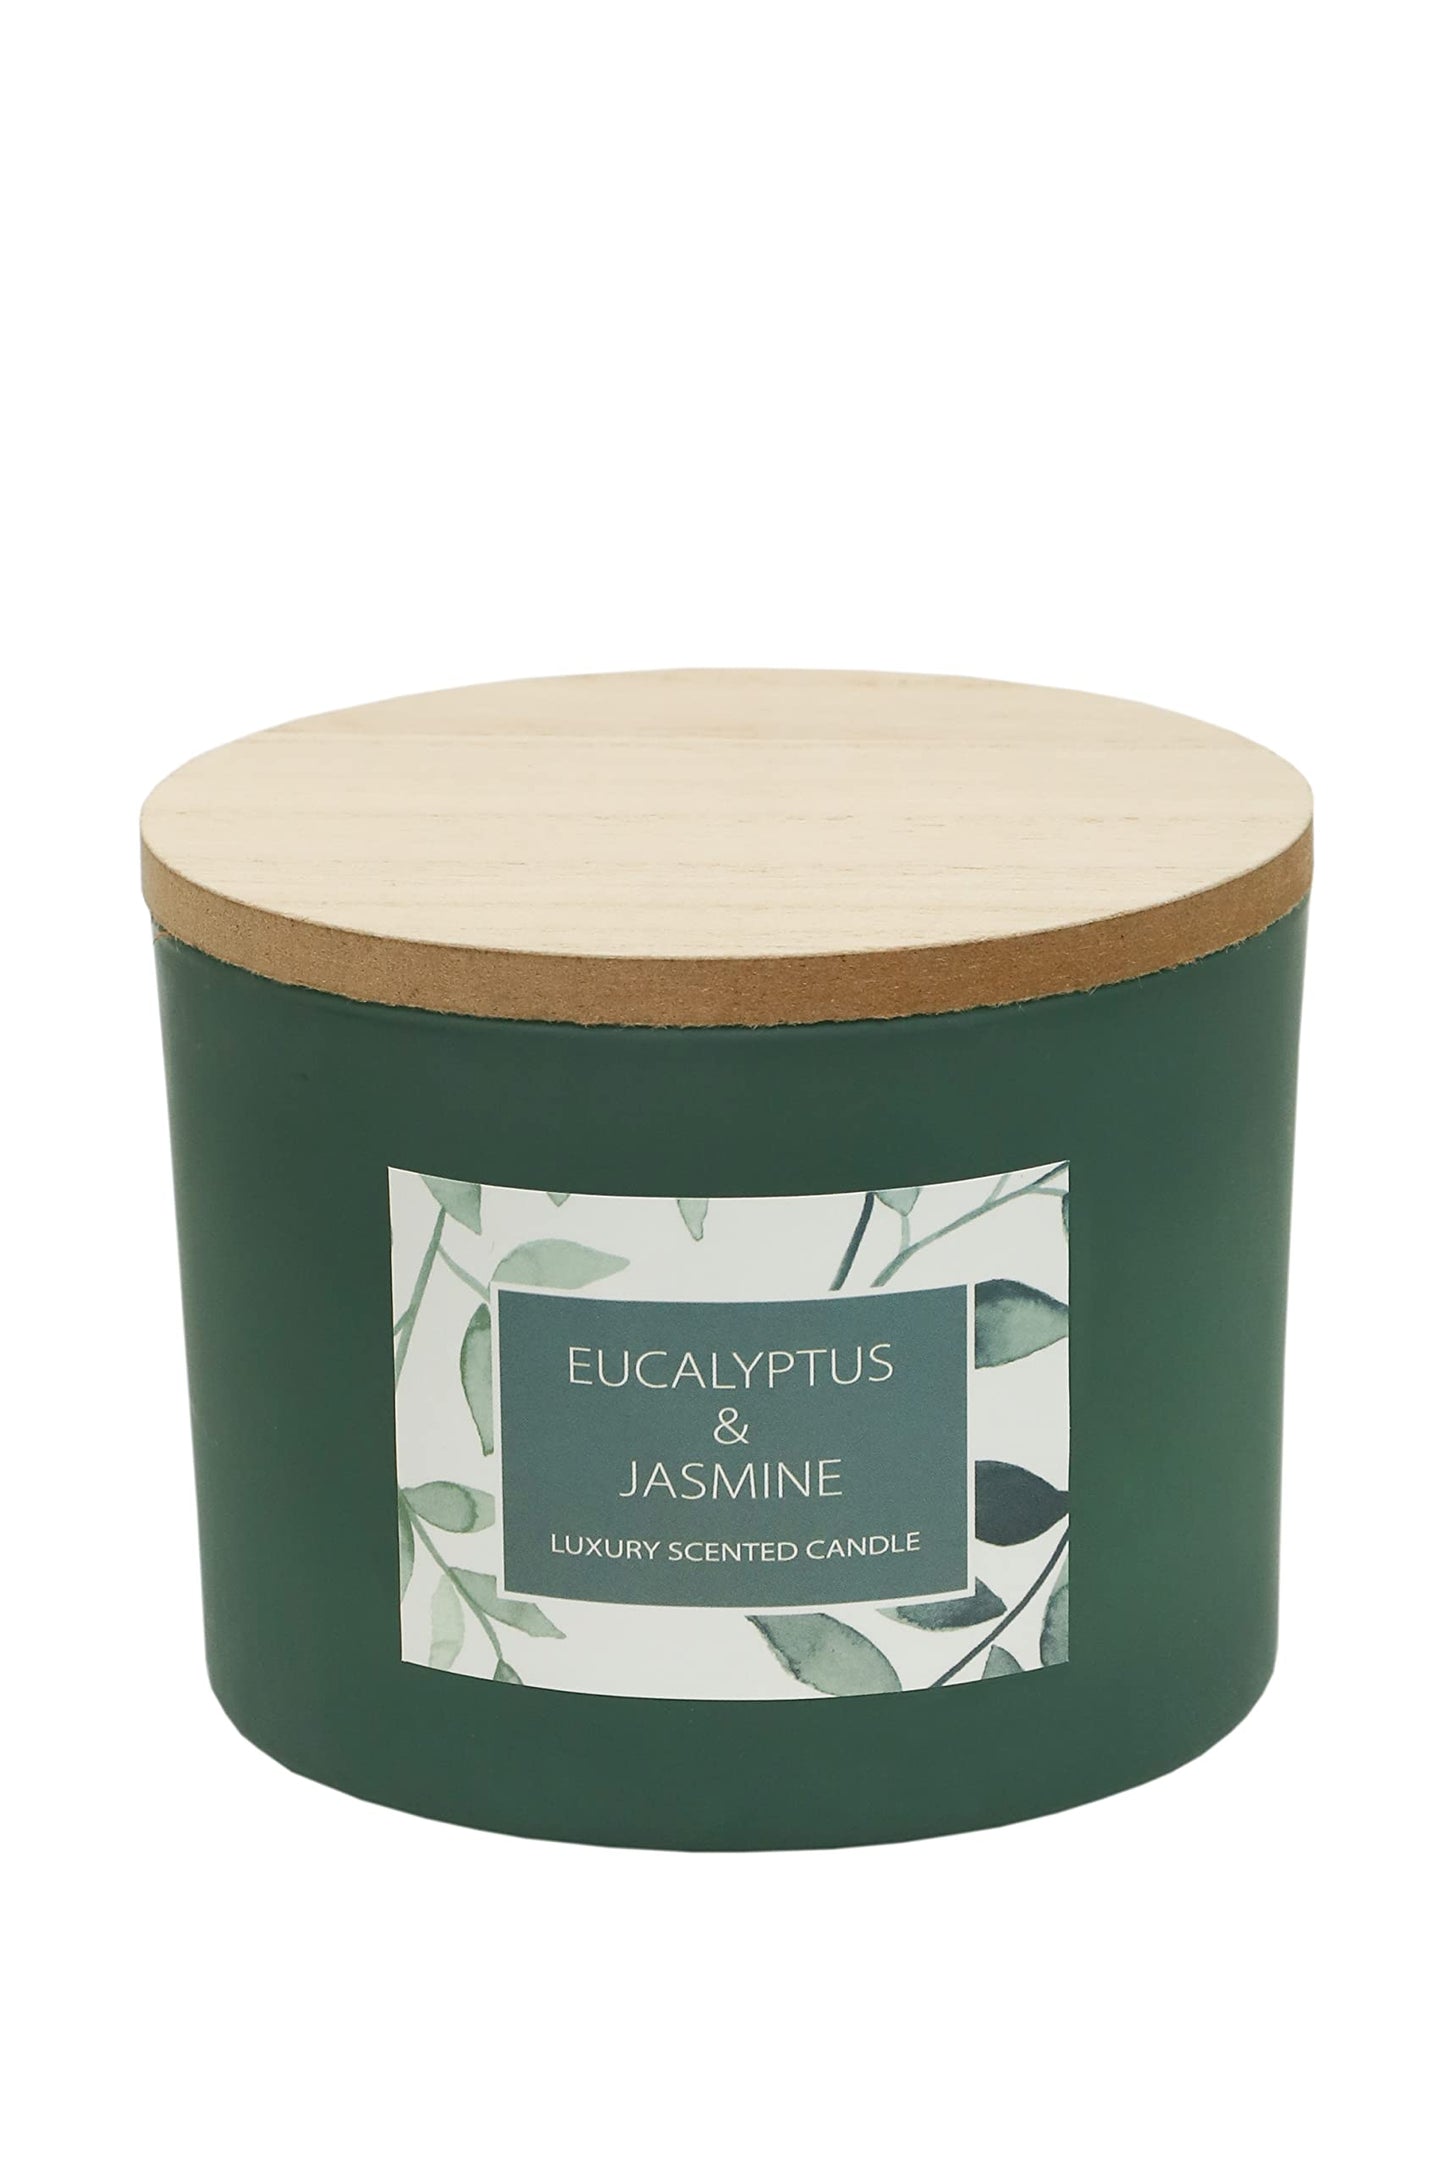 Botanical 2 Wick Candle Jar - Eucalyptus & Jasmine - 325g